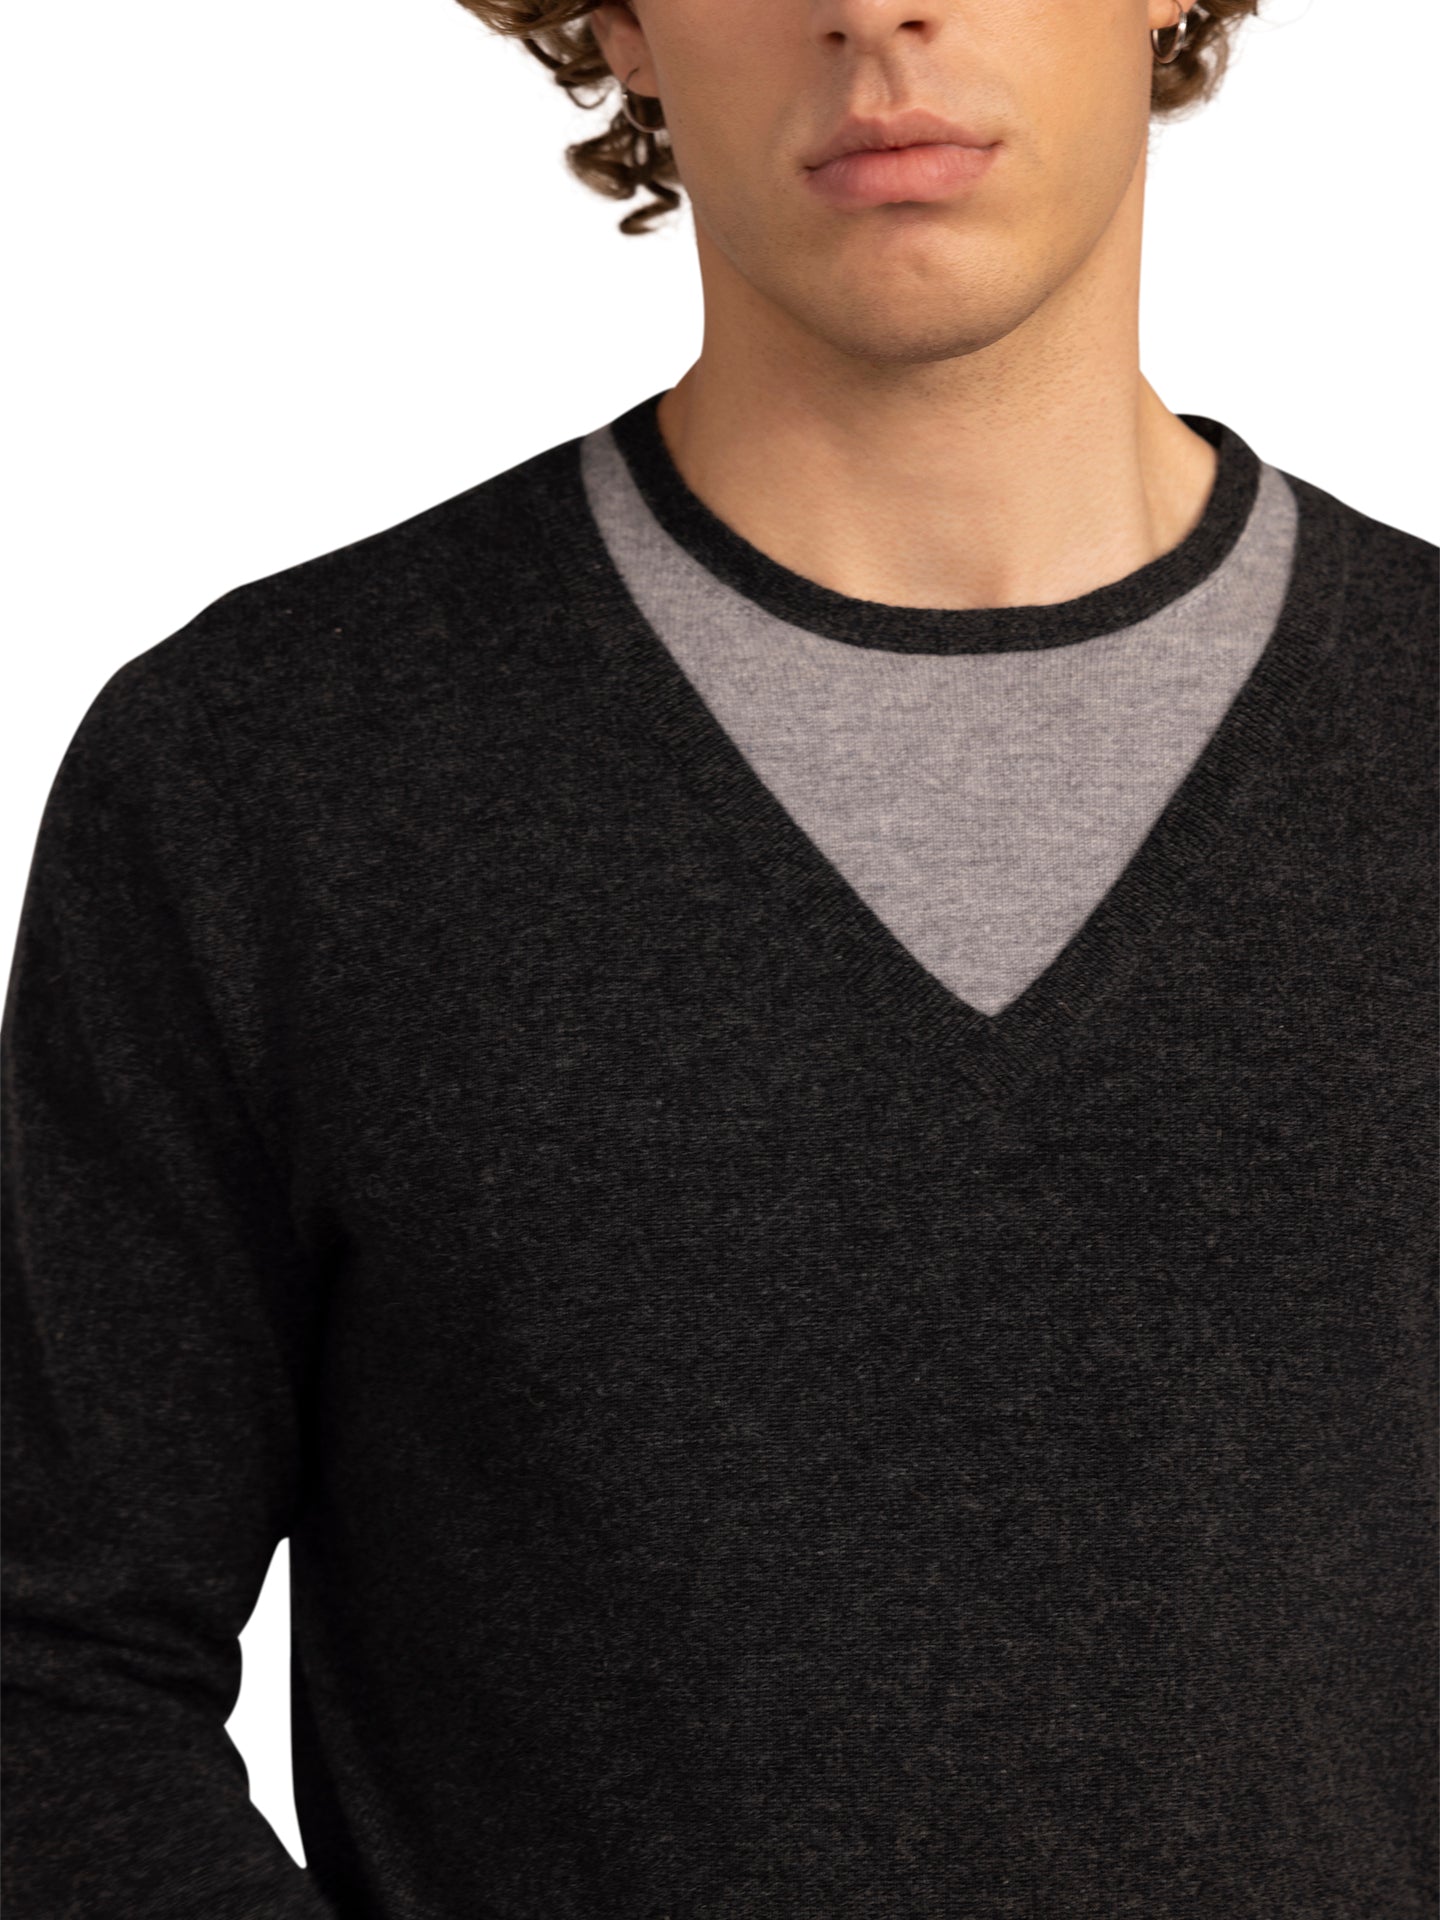 Men's Cashmere Combo-Collar Sweater Charcoal - Gobi Cashmere